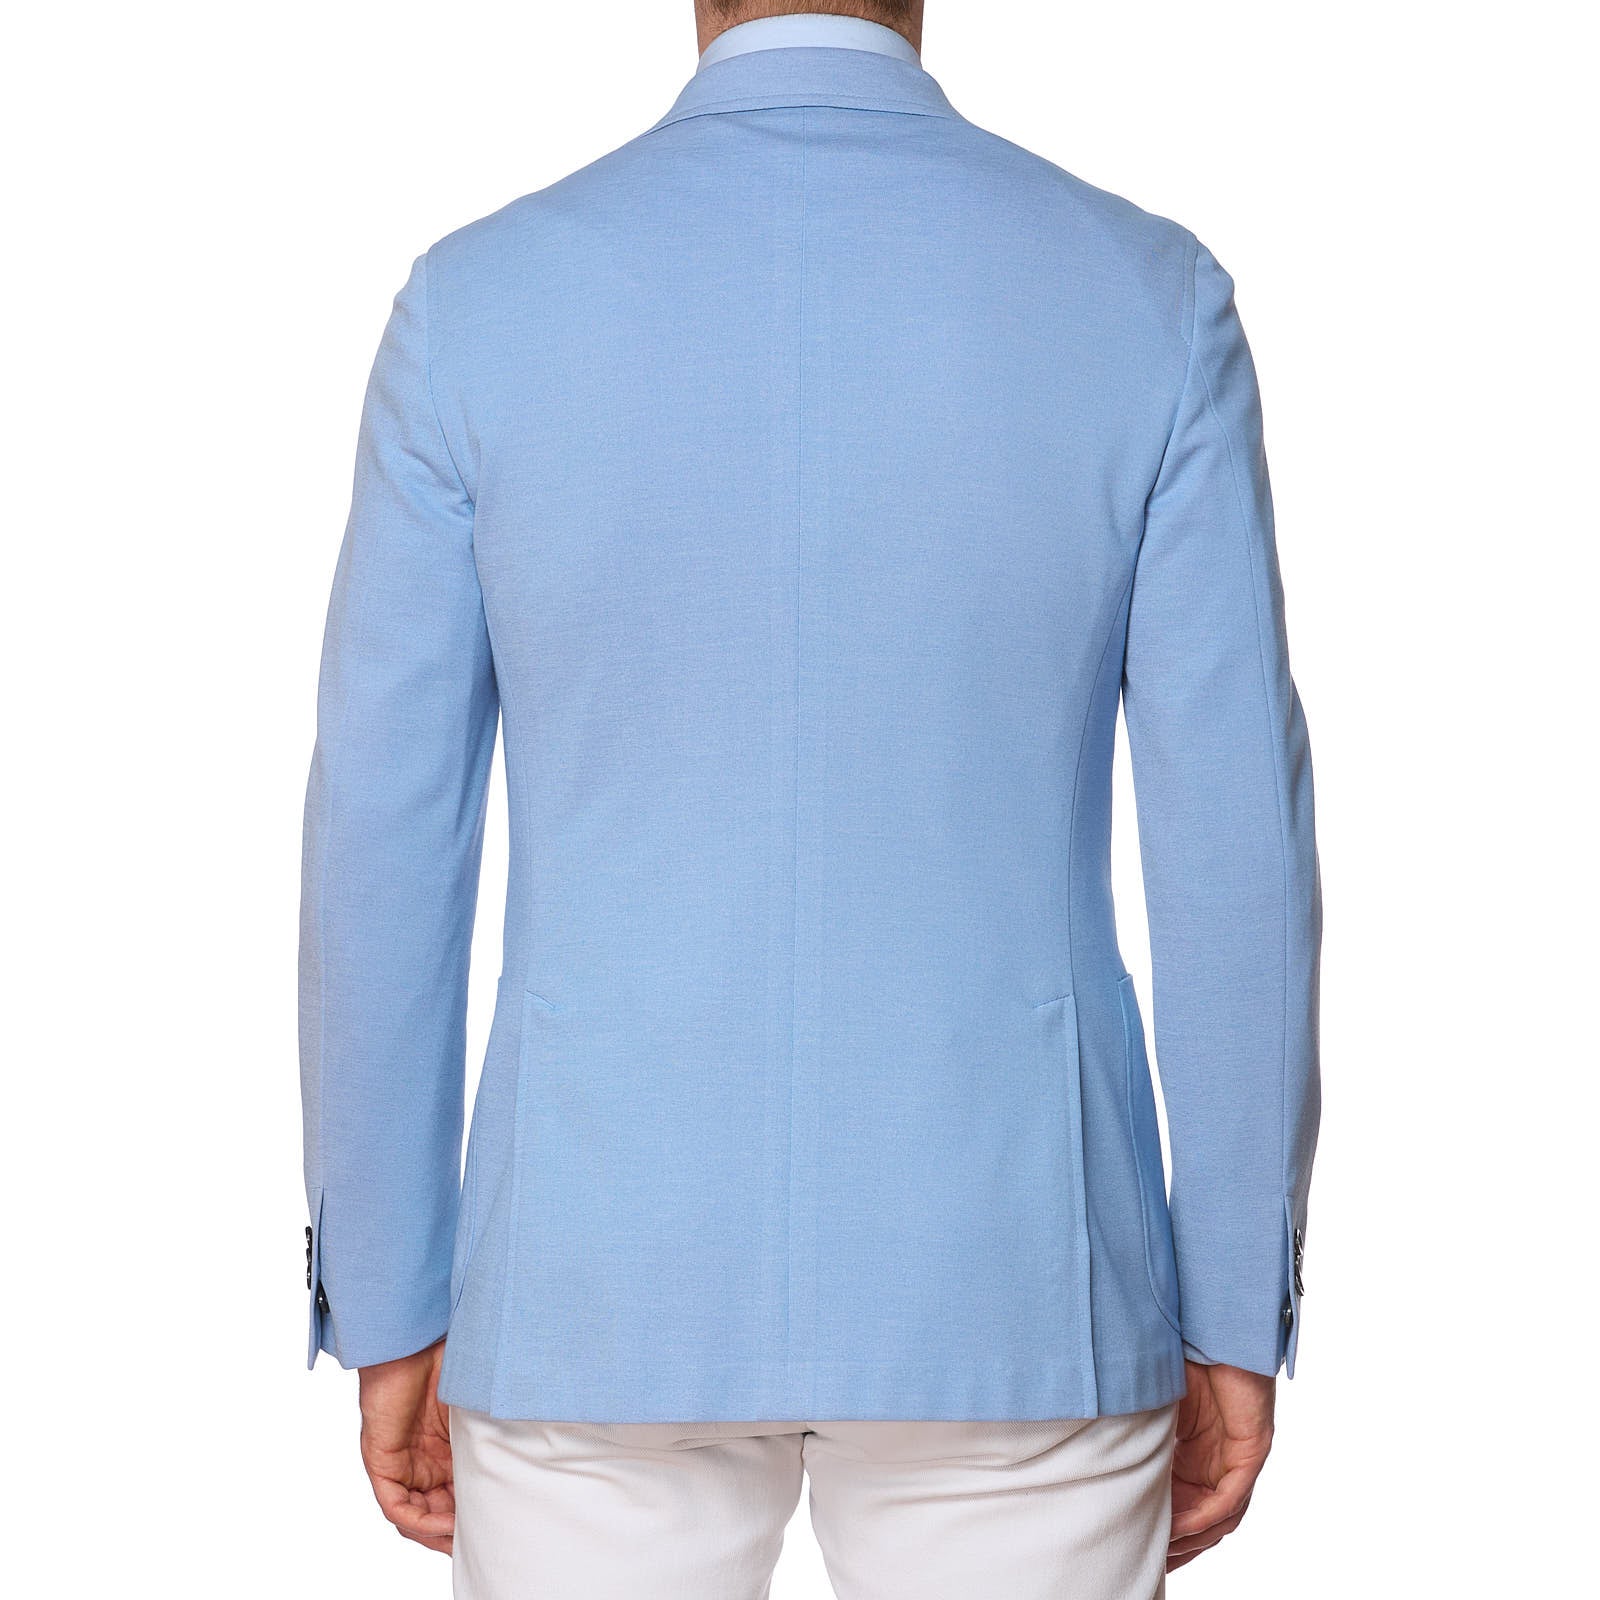 VANNUCCI Pal Zileri Green Label Milano Light Blue Summer Jacket EU 48 NEW US 38